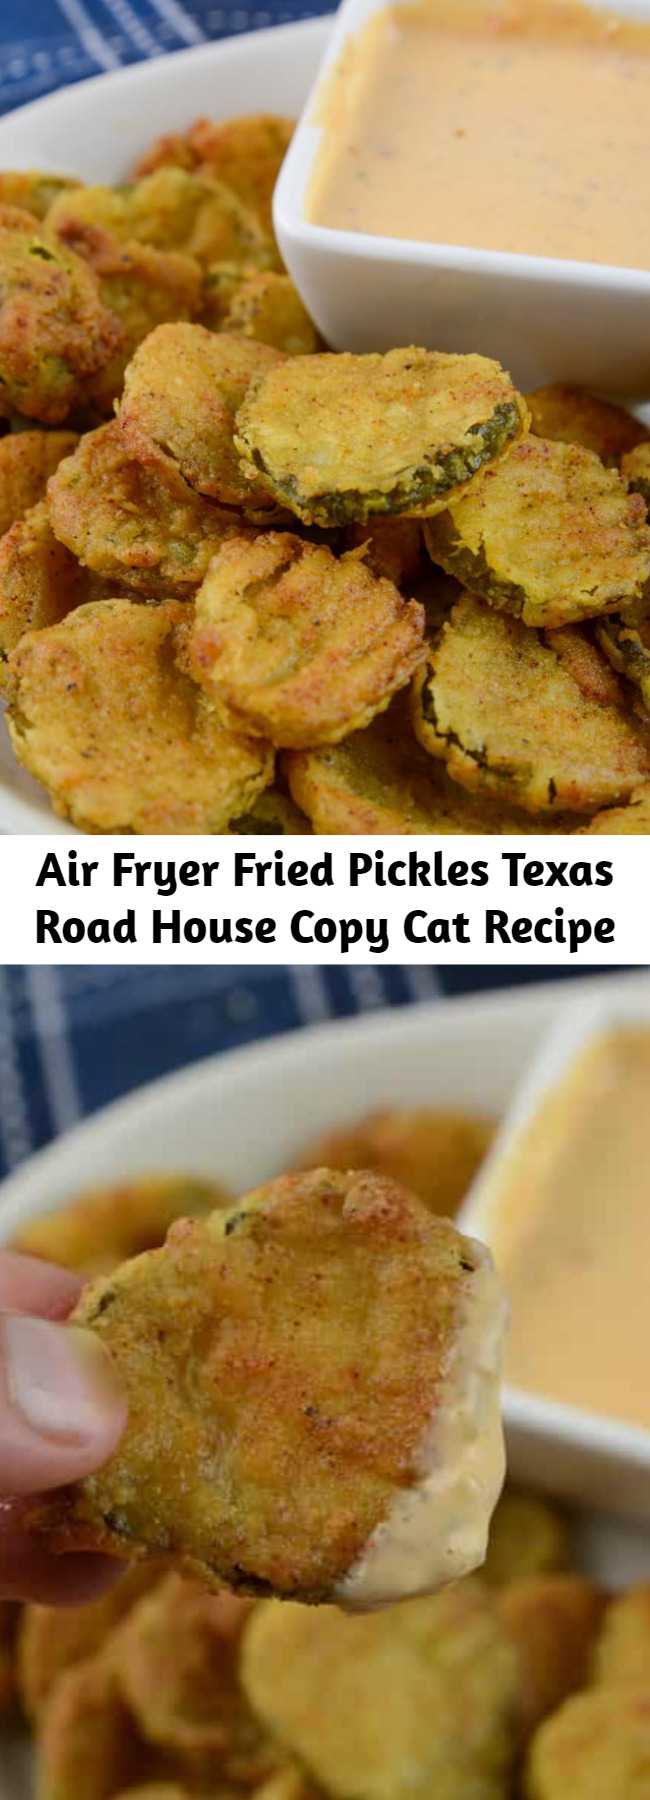 Air Fryer Fried Pickles Texas Road House Copy Cat Recipe - Mom Secret ...